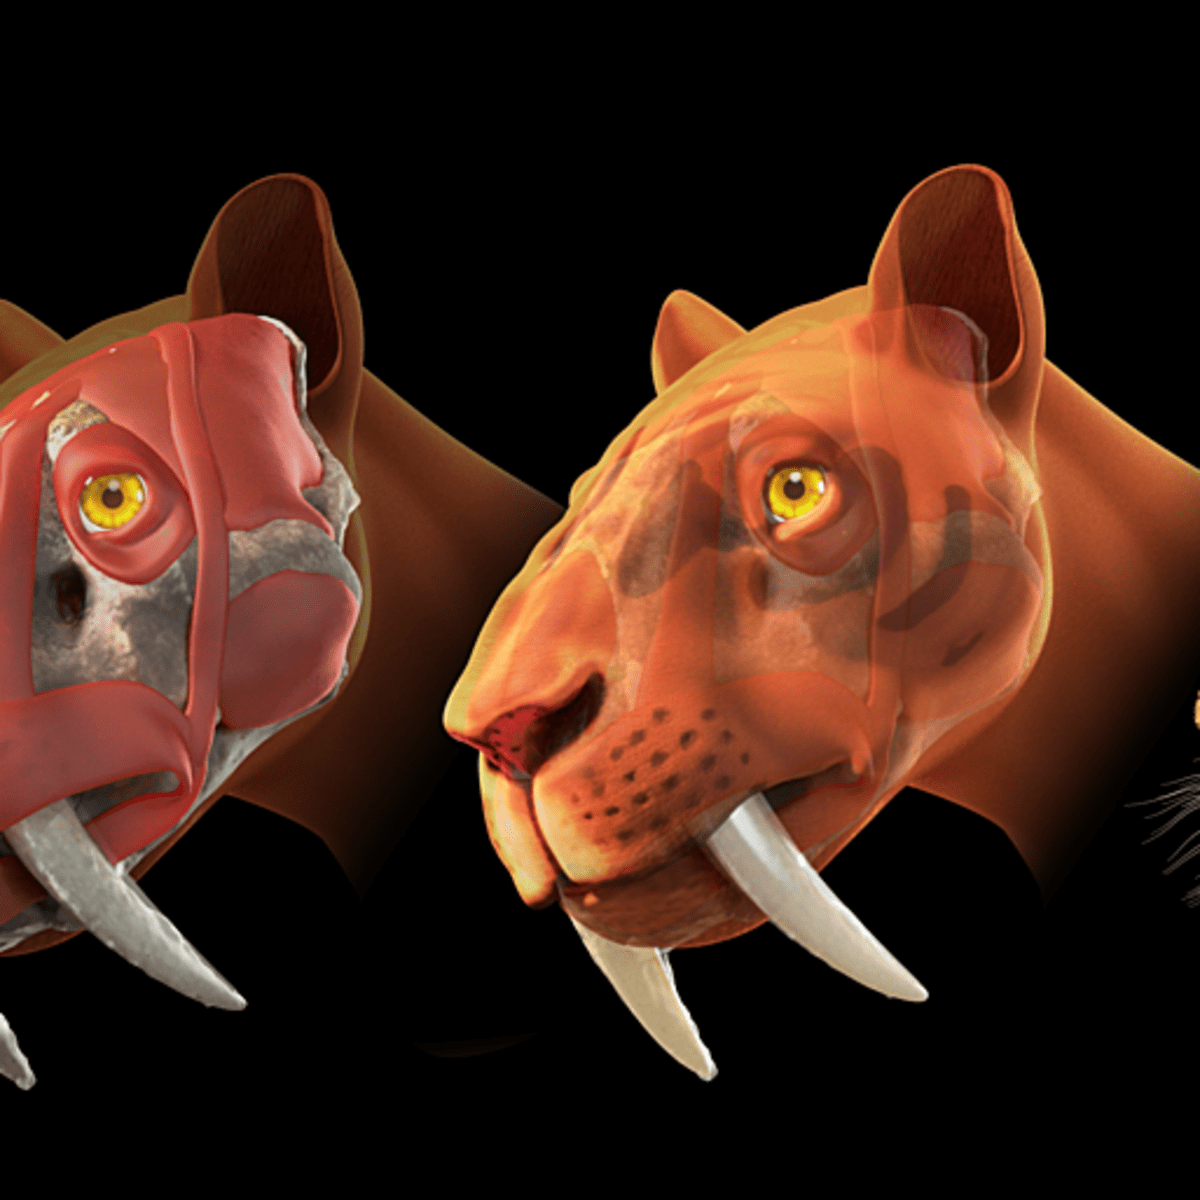 saber tooth tiger vs t rex